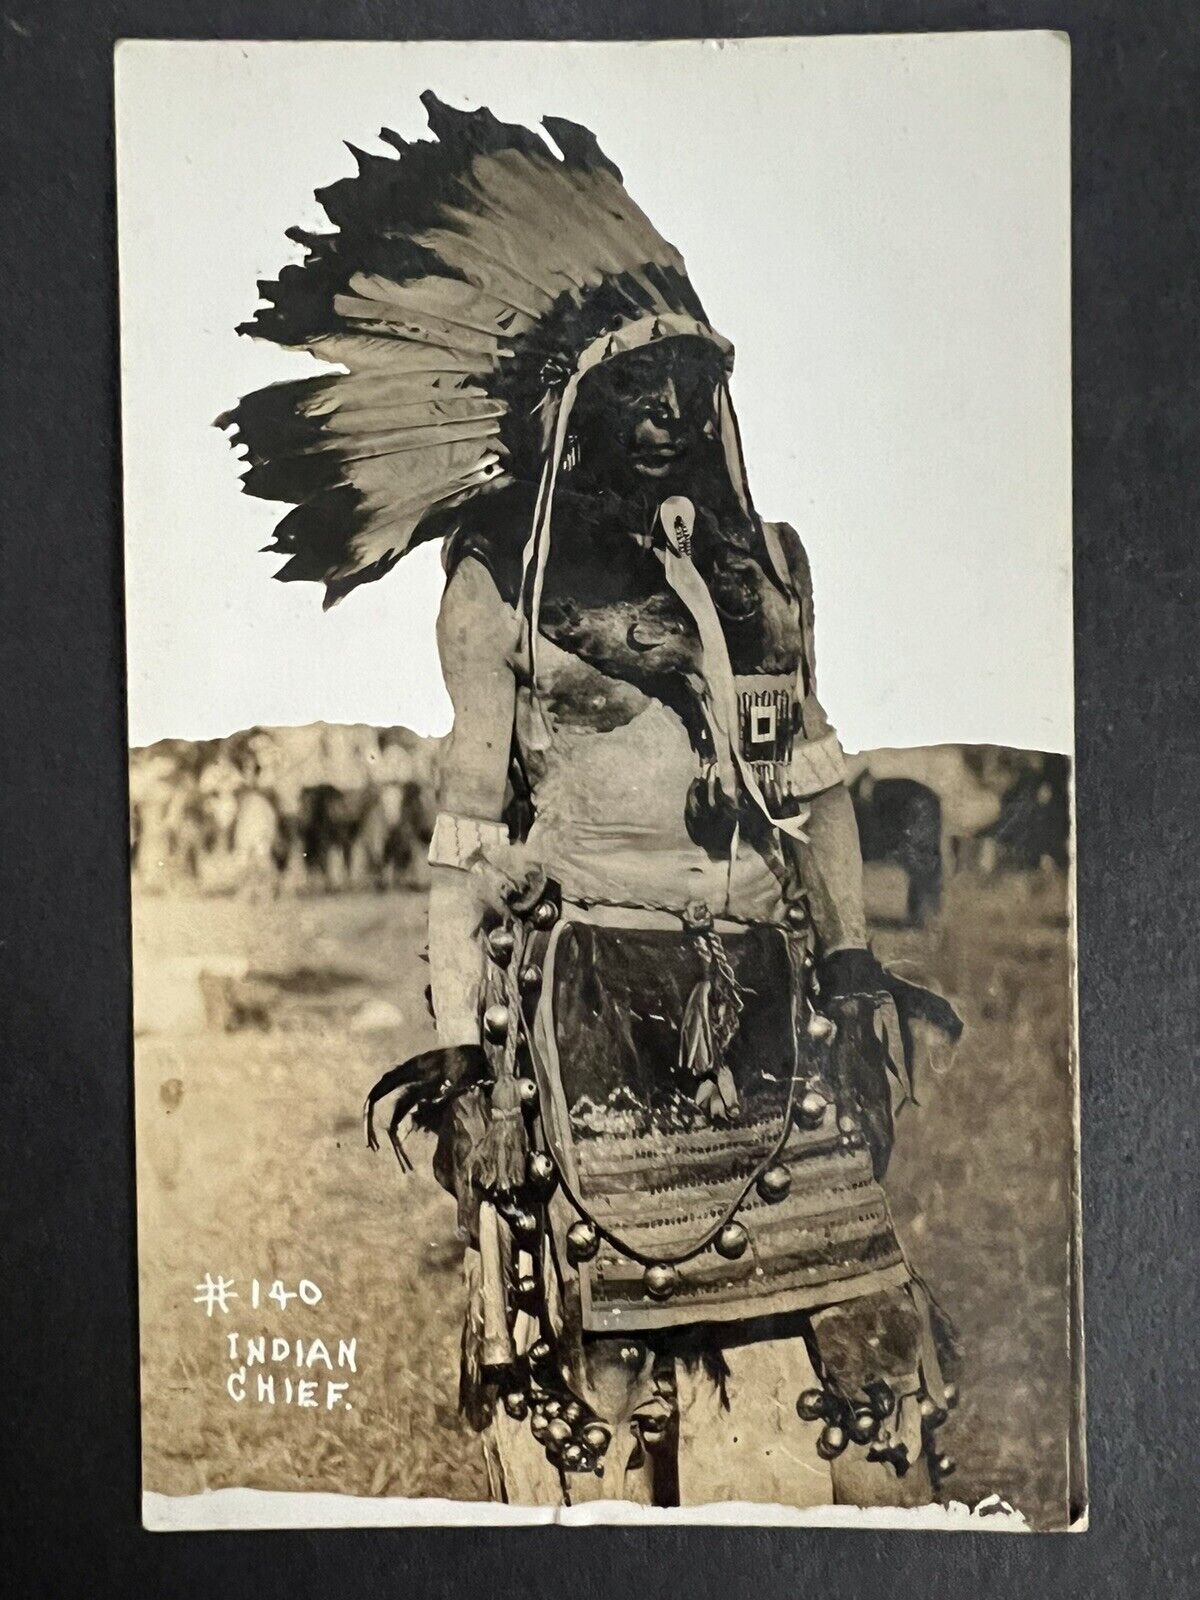 Indian Chief Photo Postcard (Original And Rare)